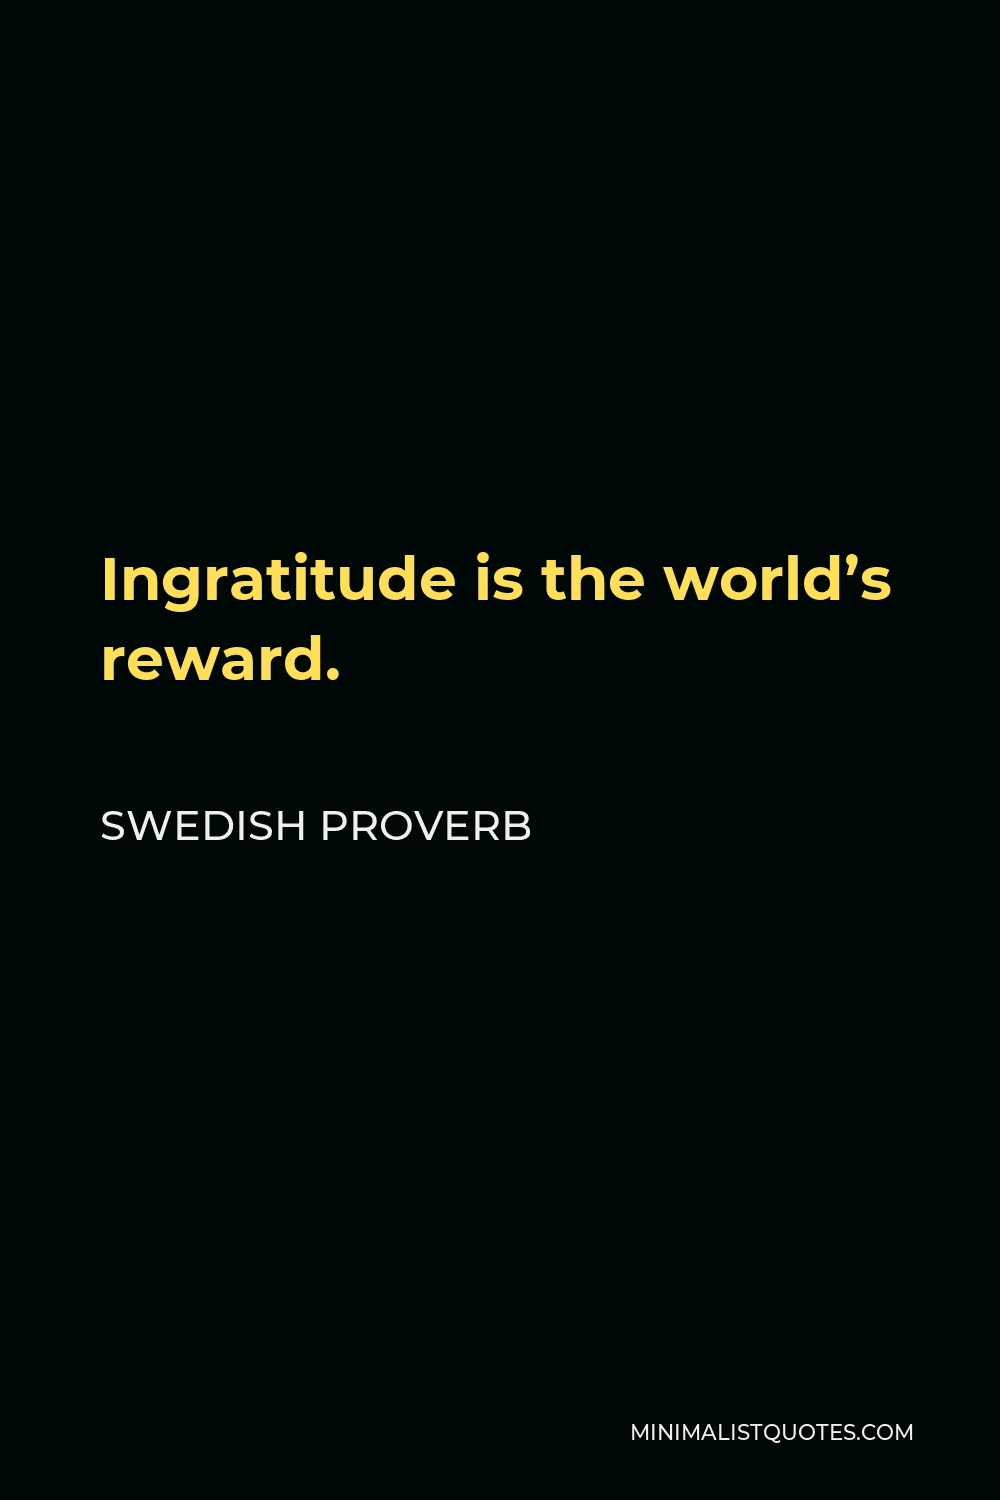 Swedish Proverb Quote - Ingratitude is the world’s reward.